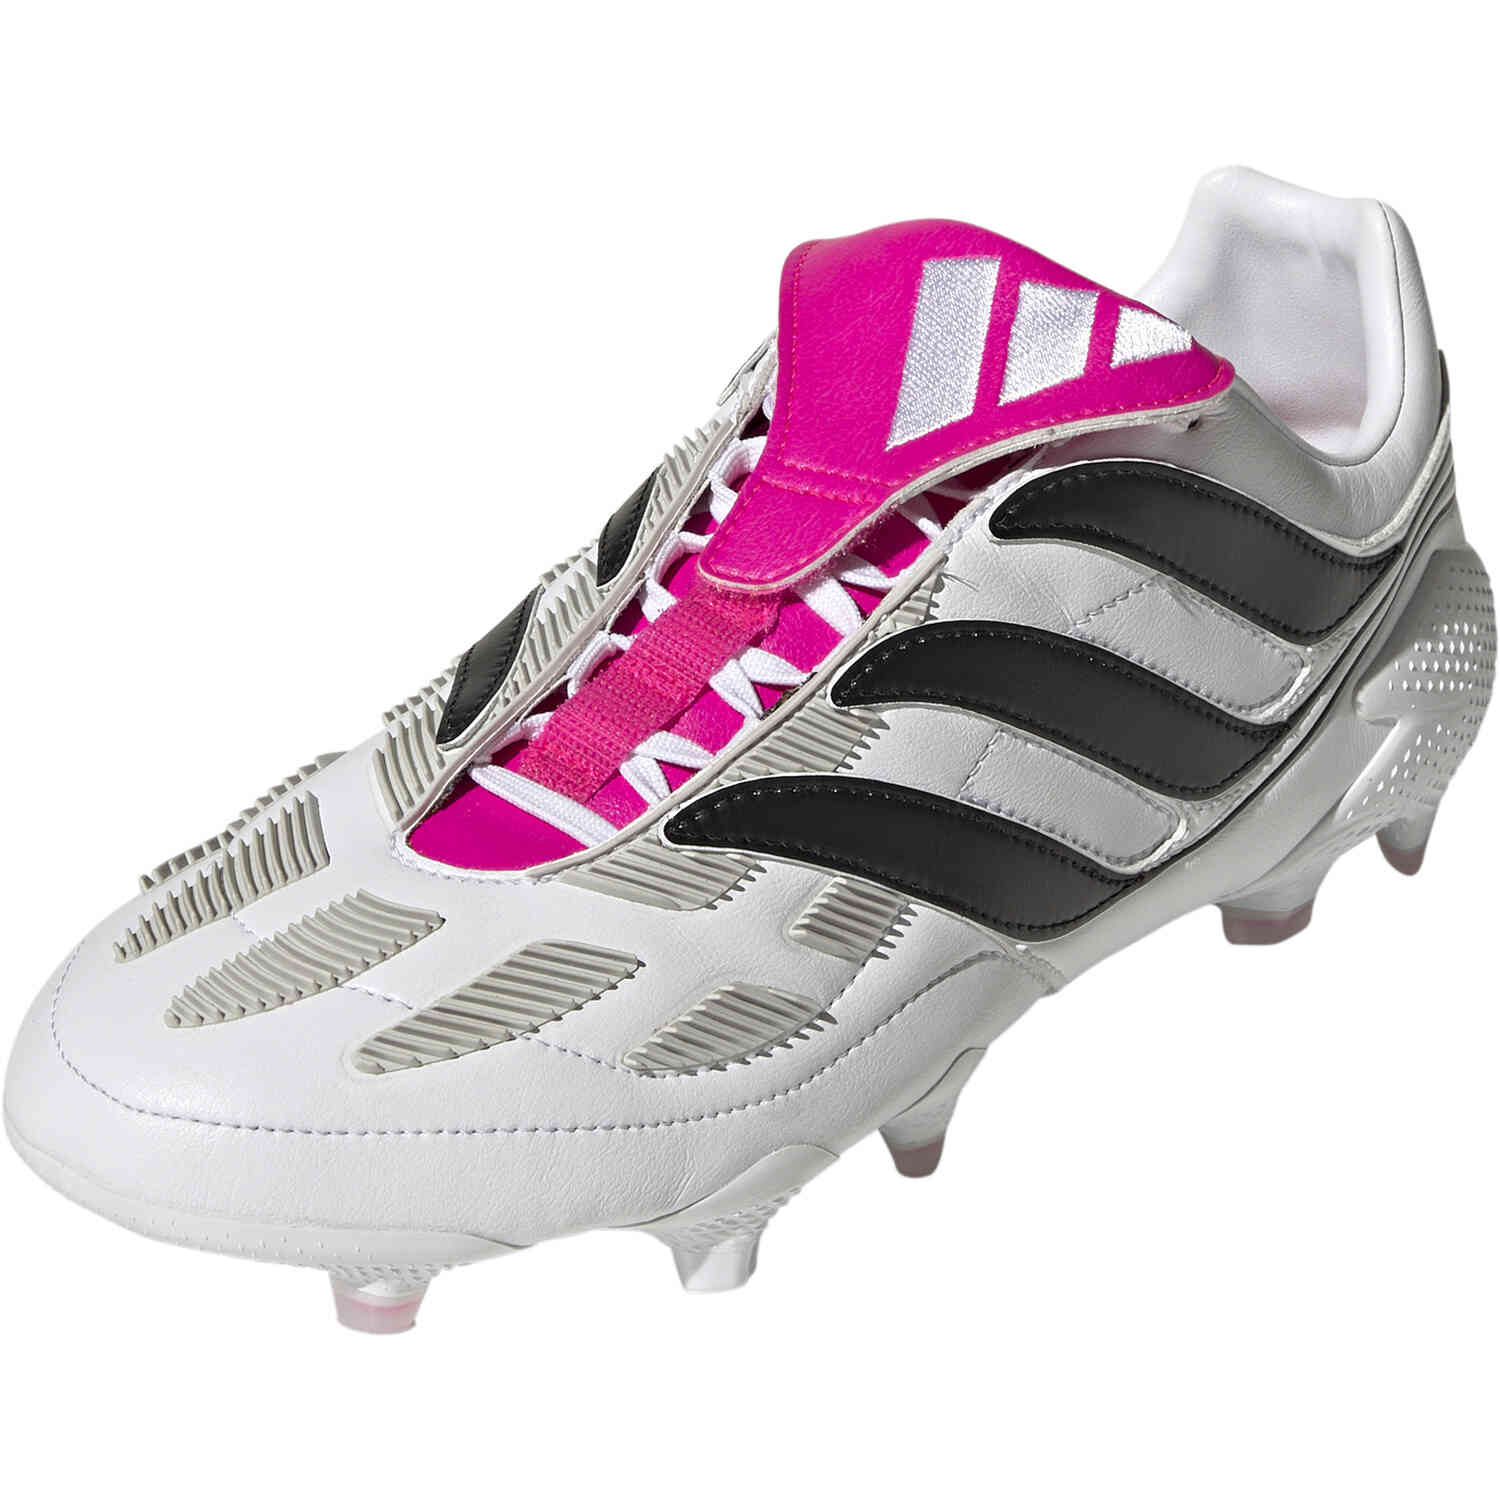 Predator Precision.1 - White & Black with Shock Pink 2 - SoccerPro